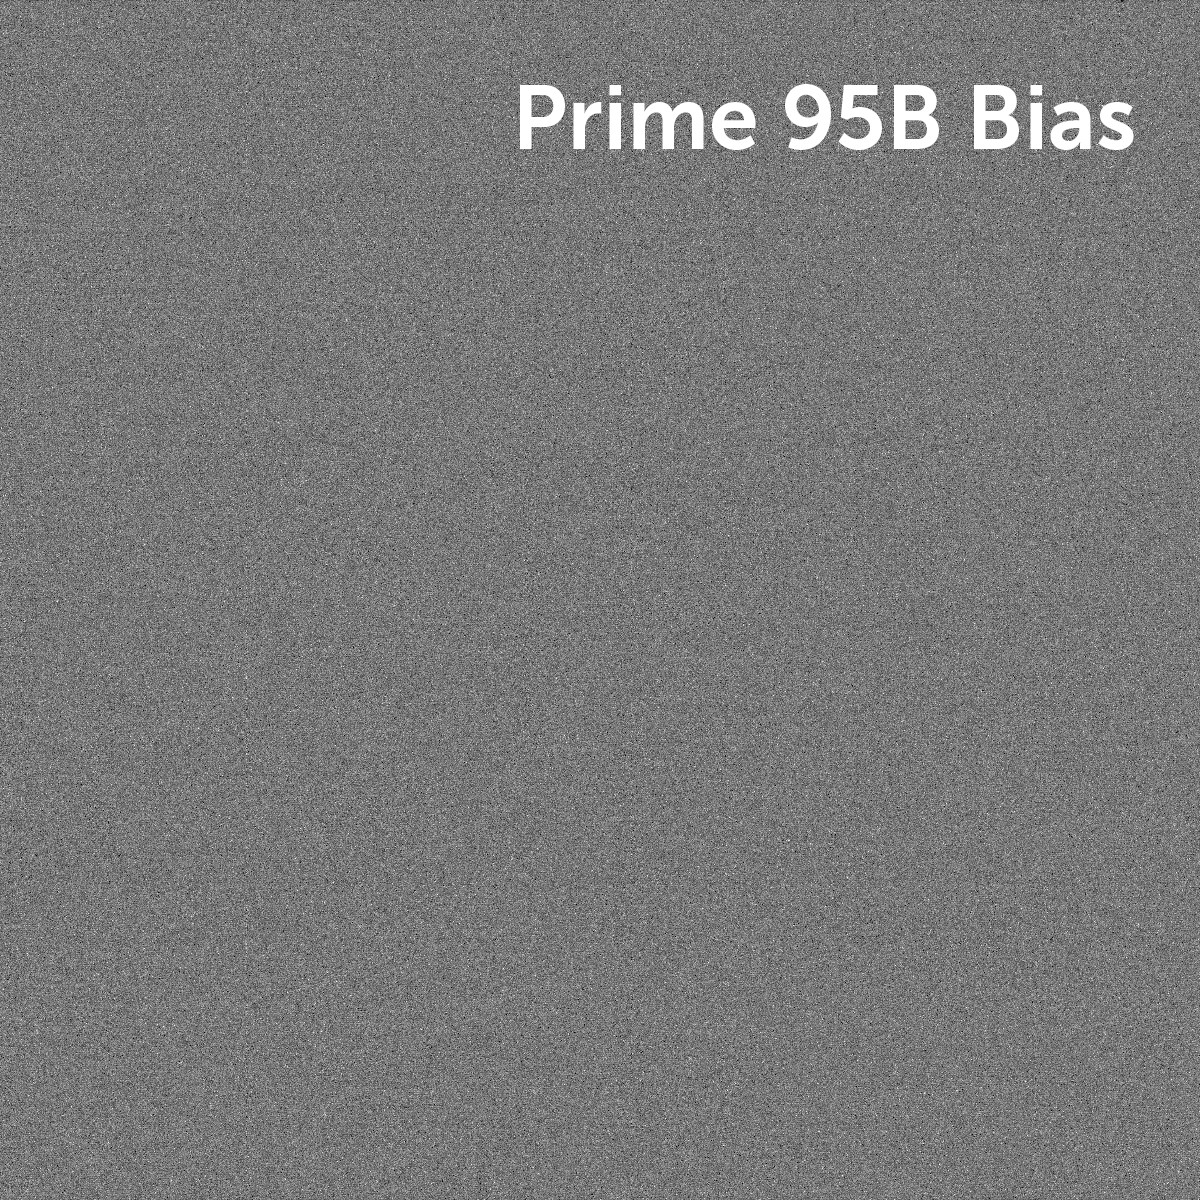 Prime-95B-bias